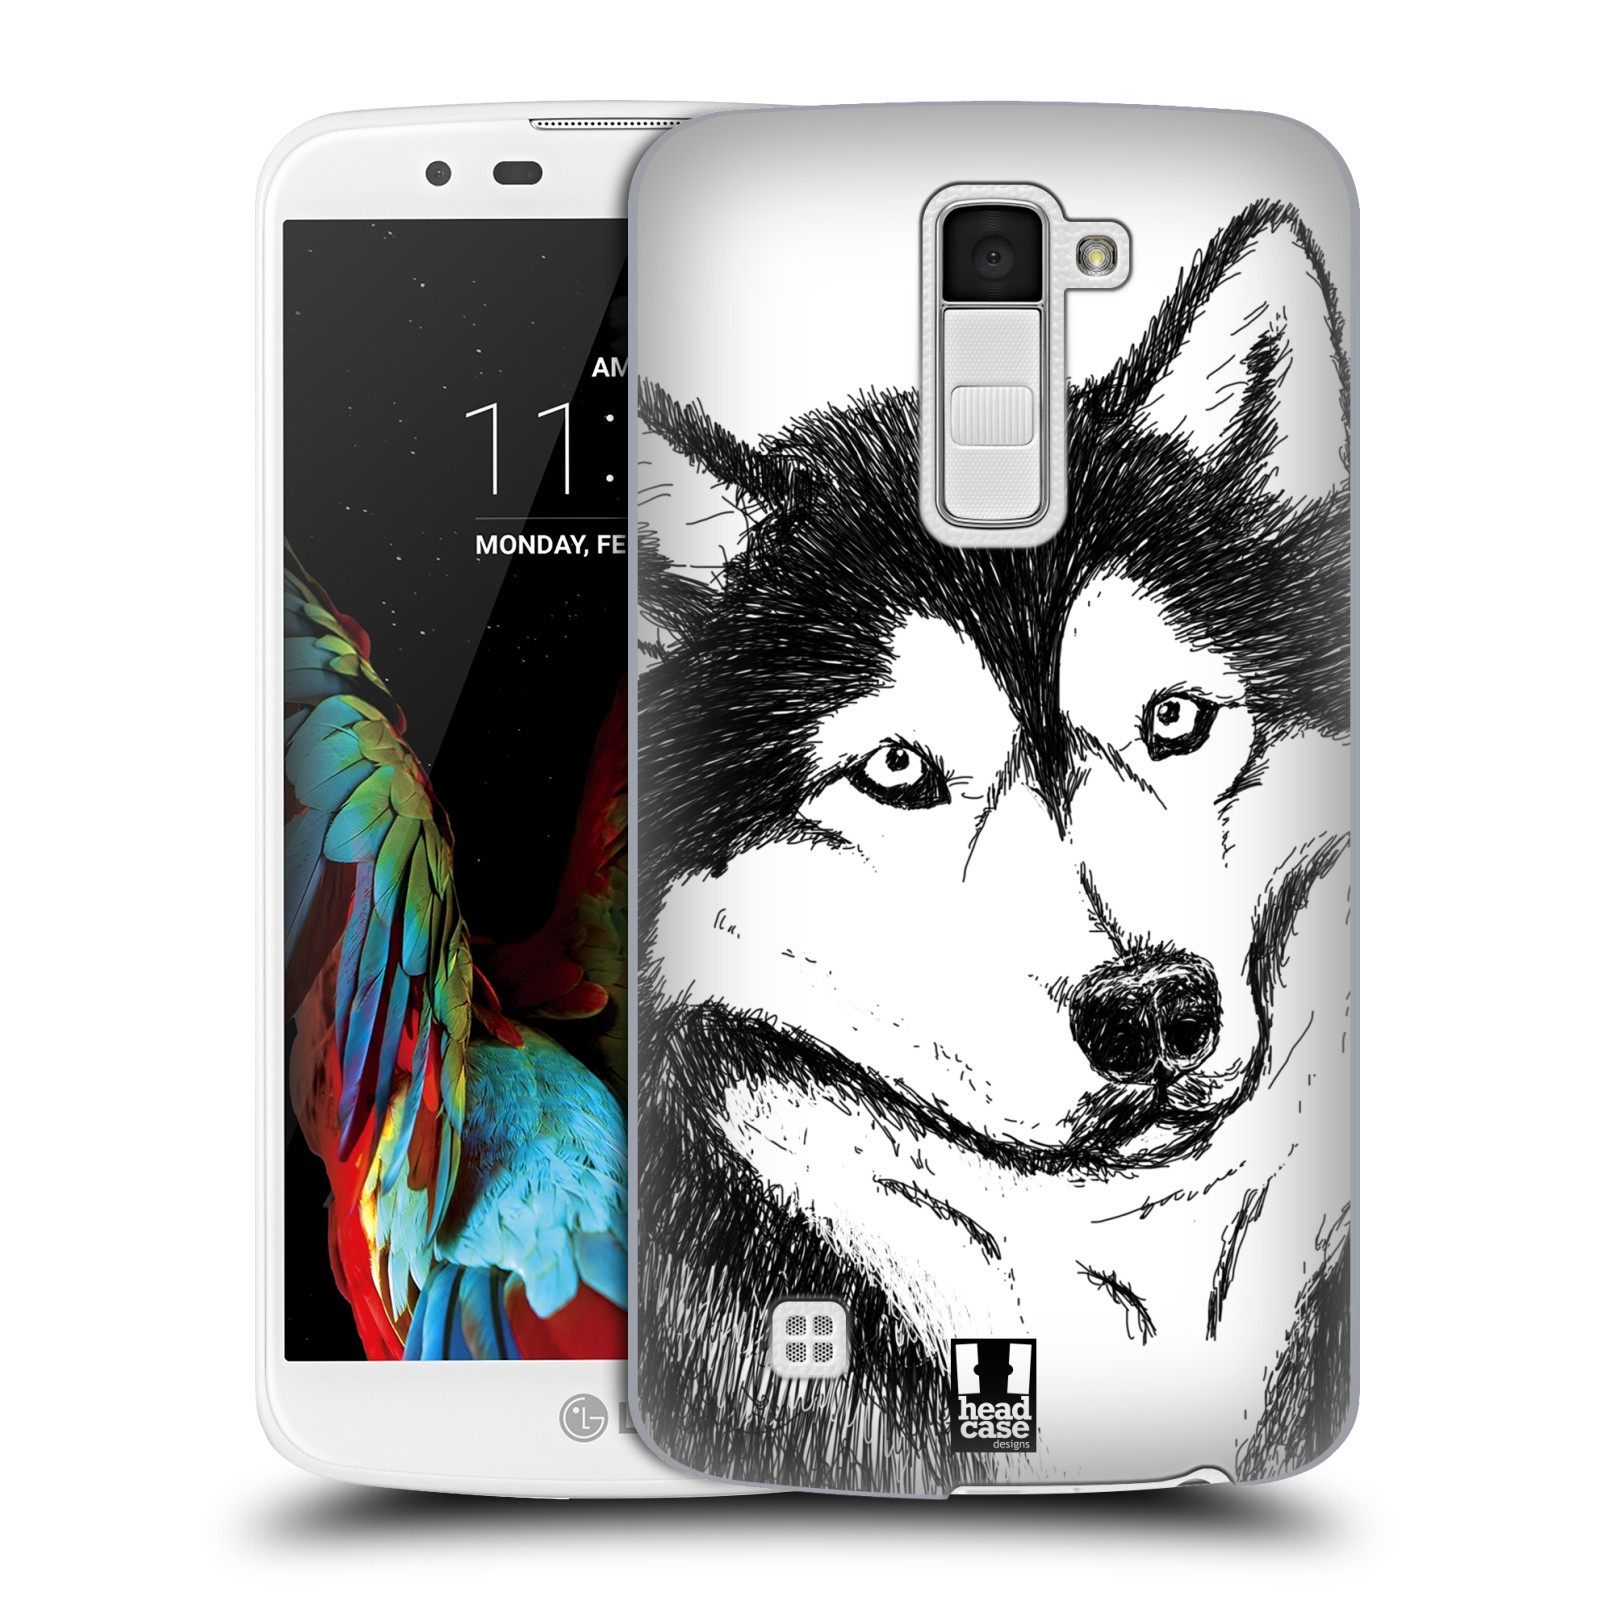 HEAD CASE plastový obal na mobil LG K10 vzor Kreslená zvířátka černá a bílá pes husky